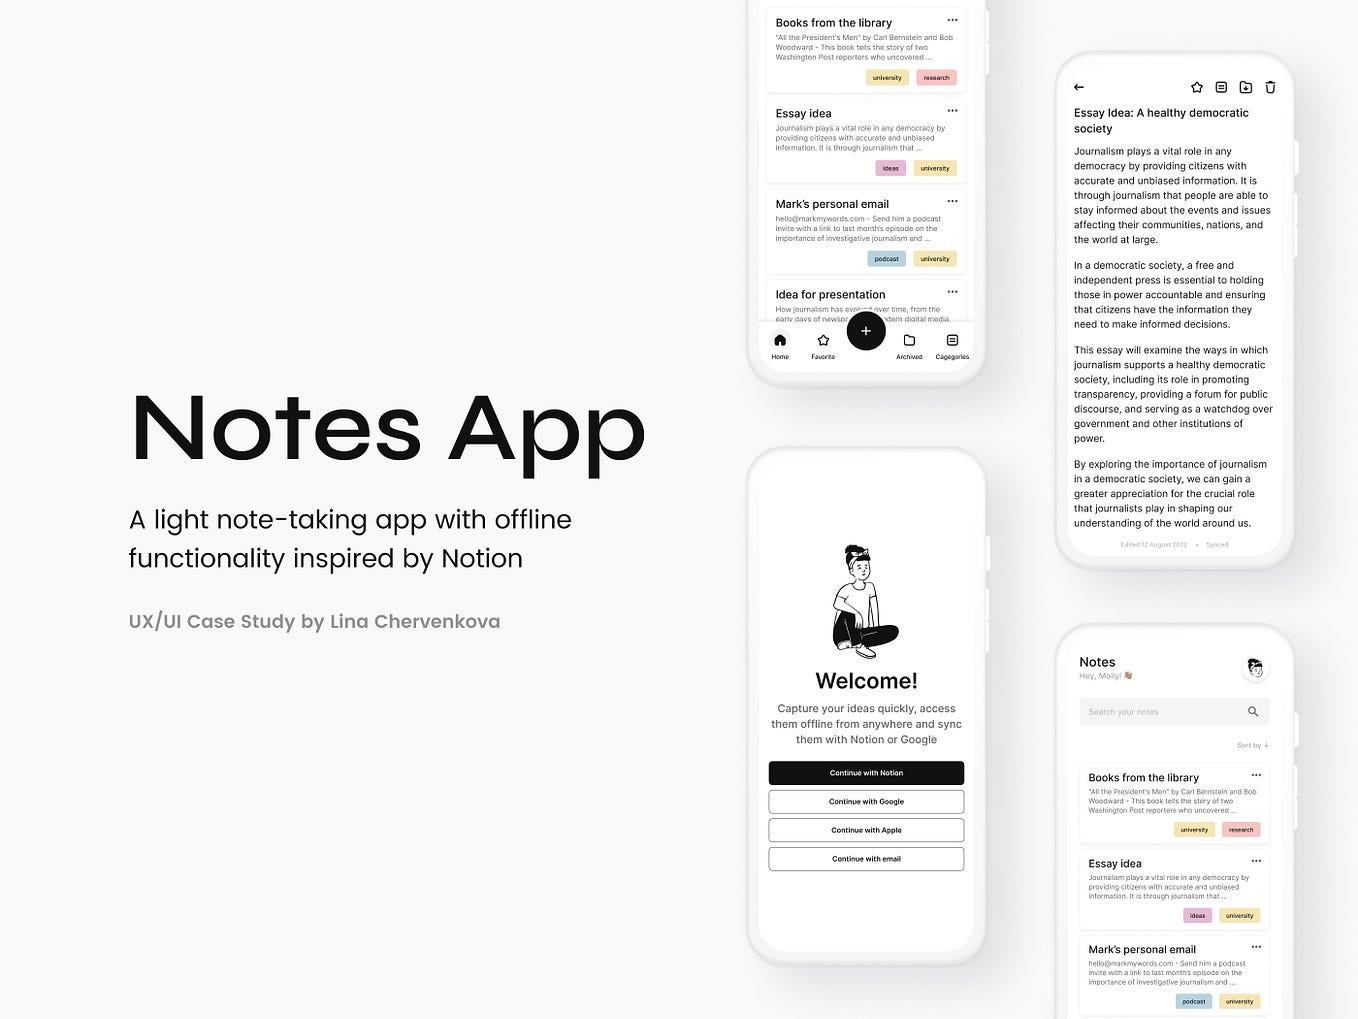 UI/UX Case Study: Notes App